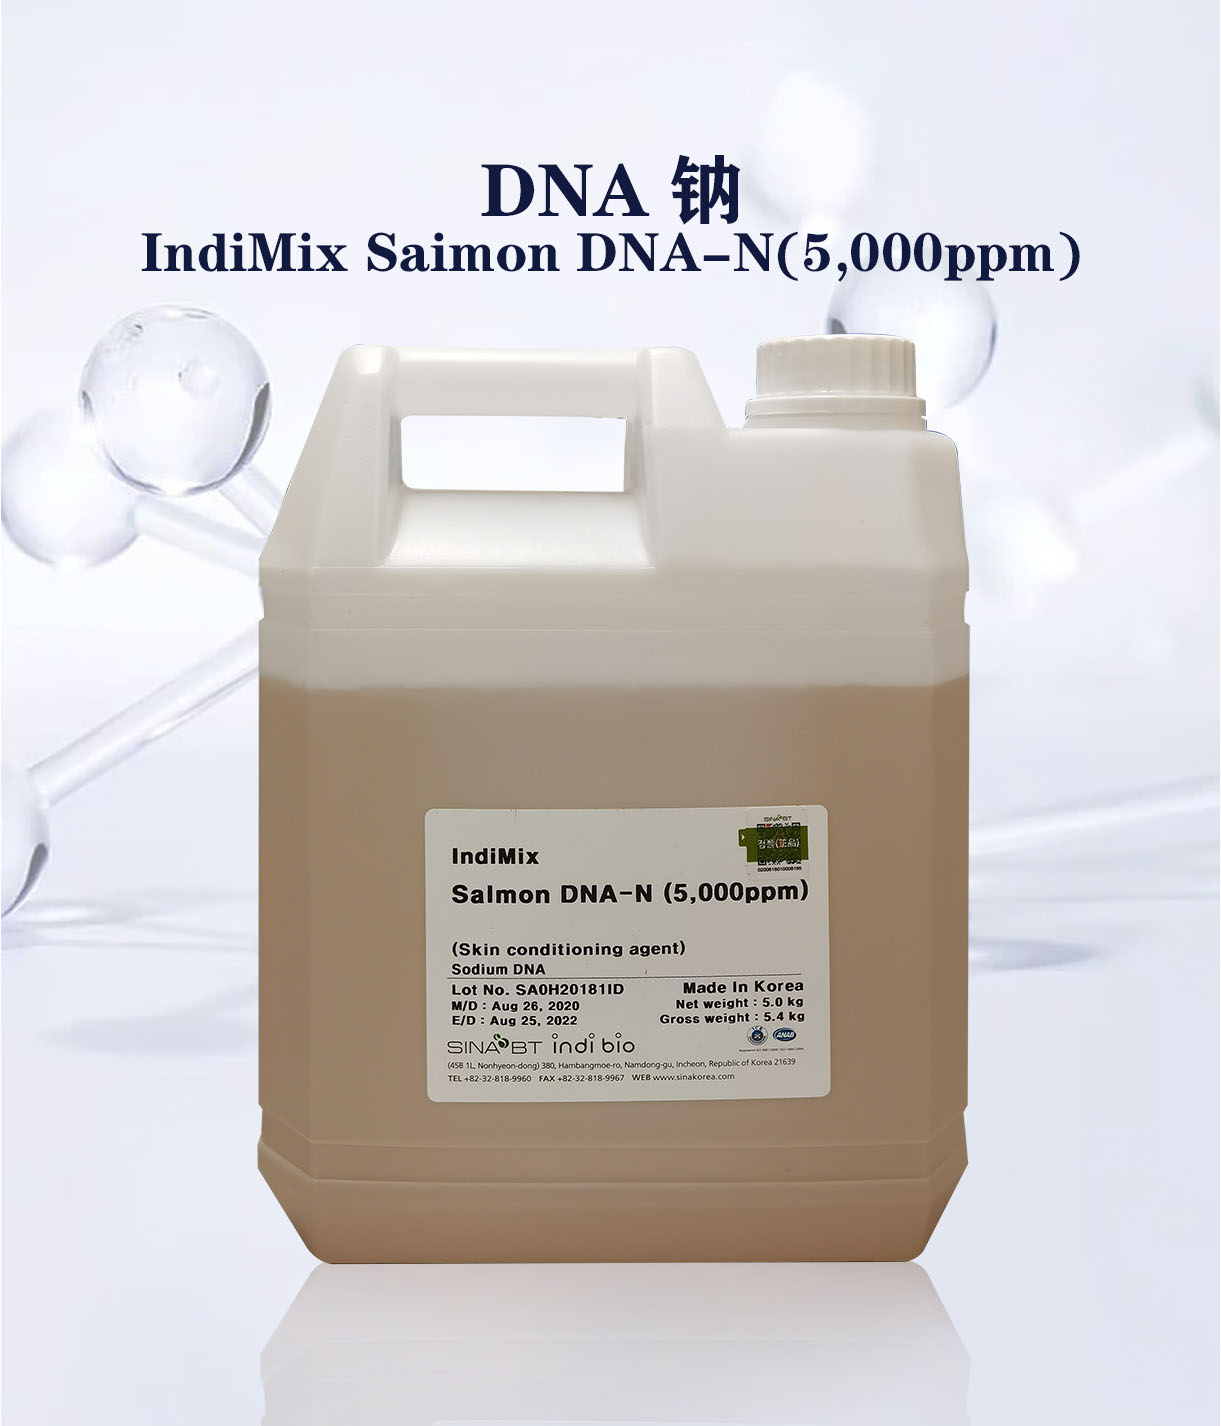 IndiMix Salmon DNA-N (5,000ppm)